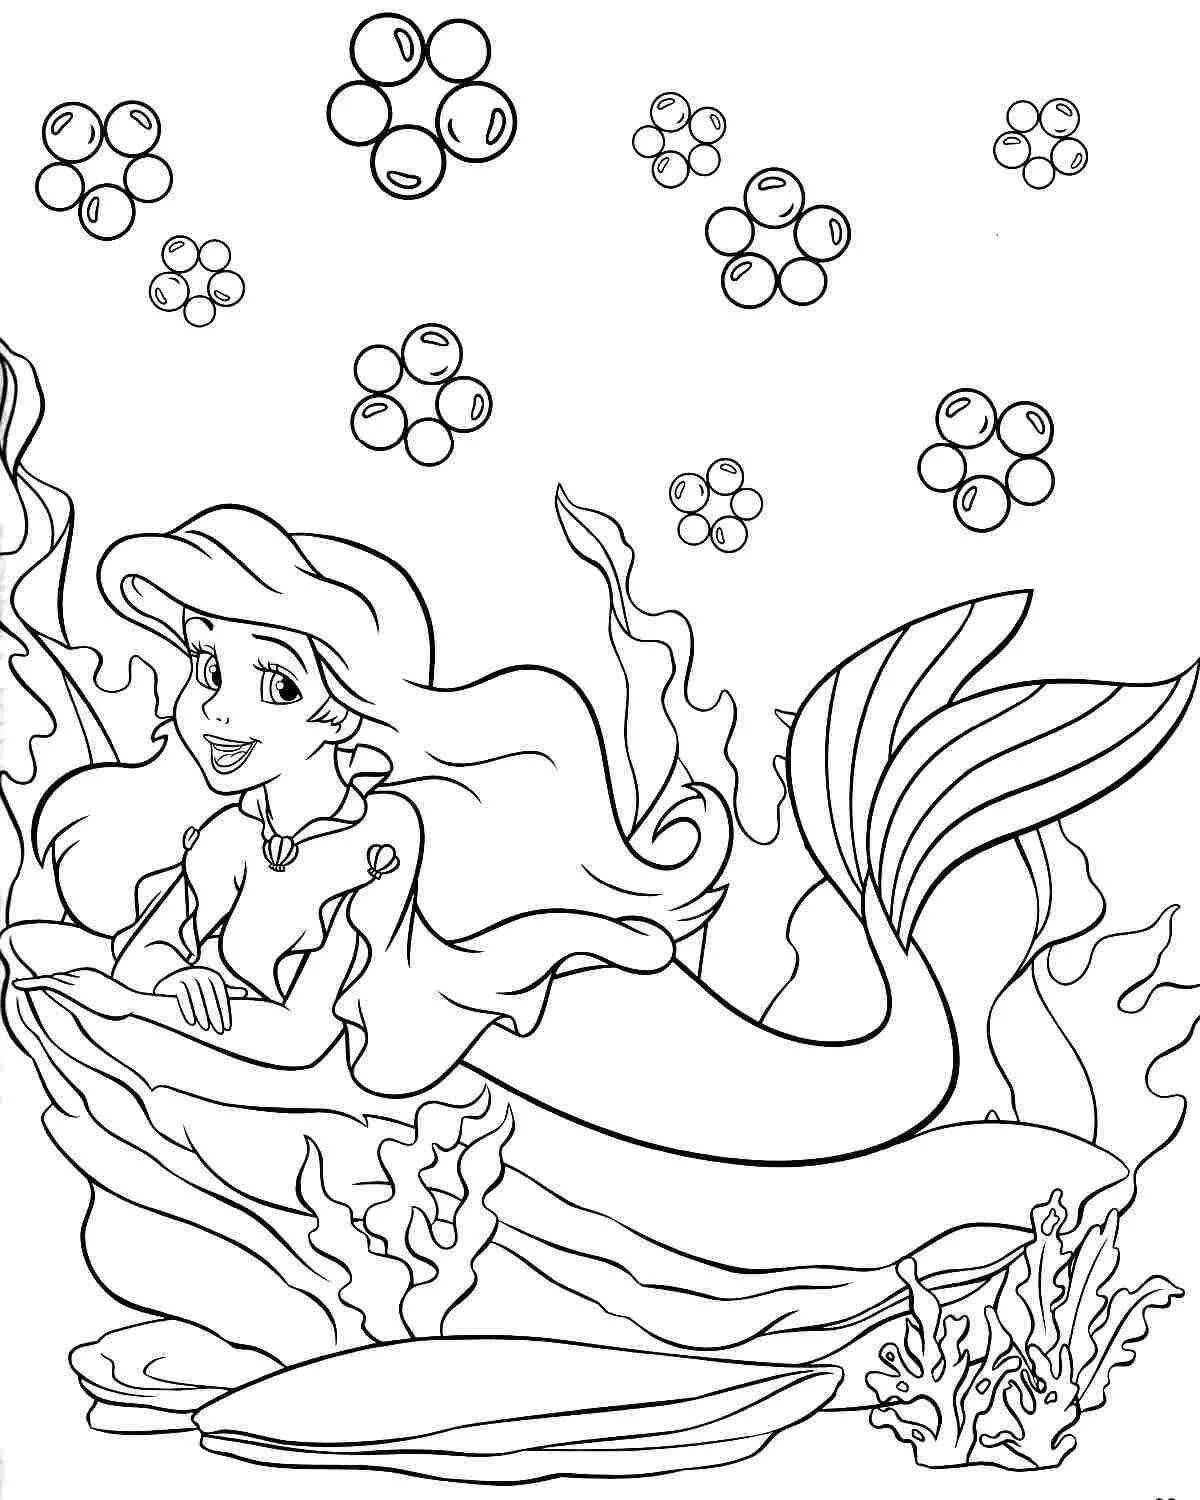 Radiant coloring page disney little mermaid